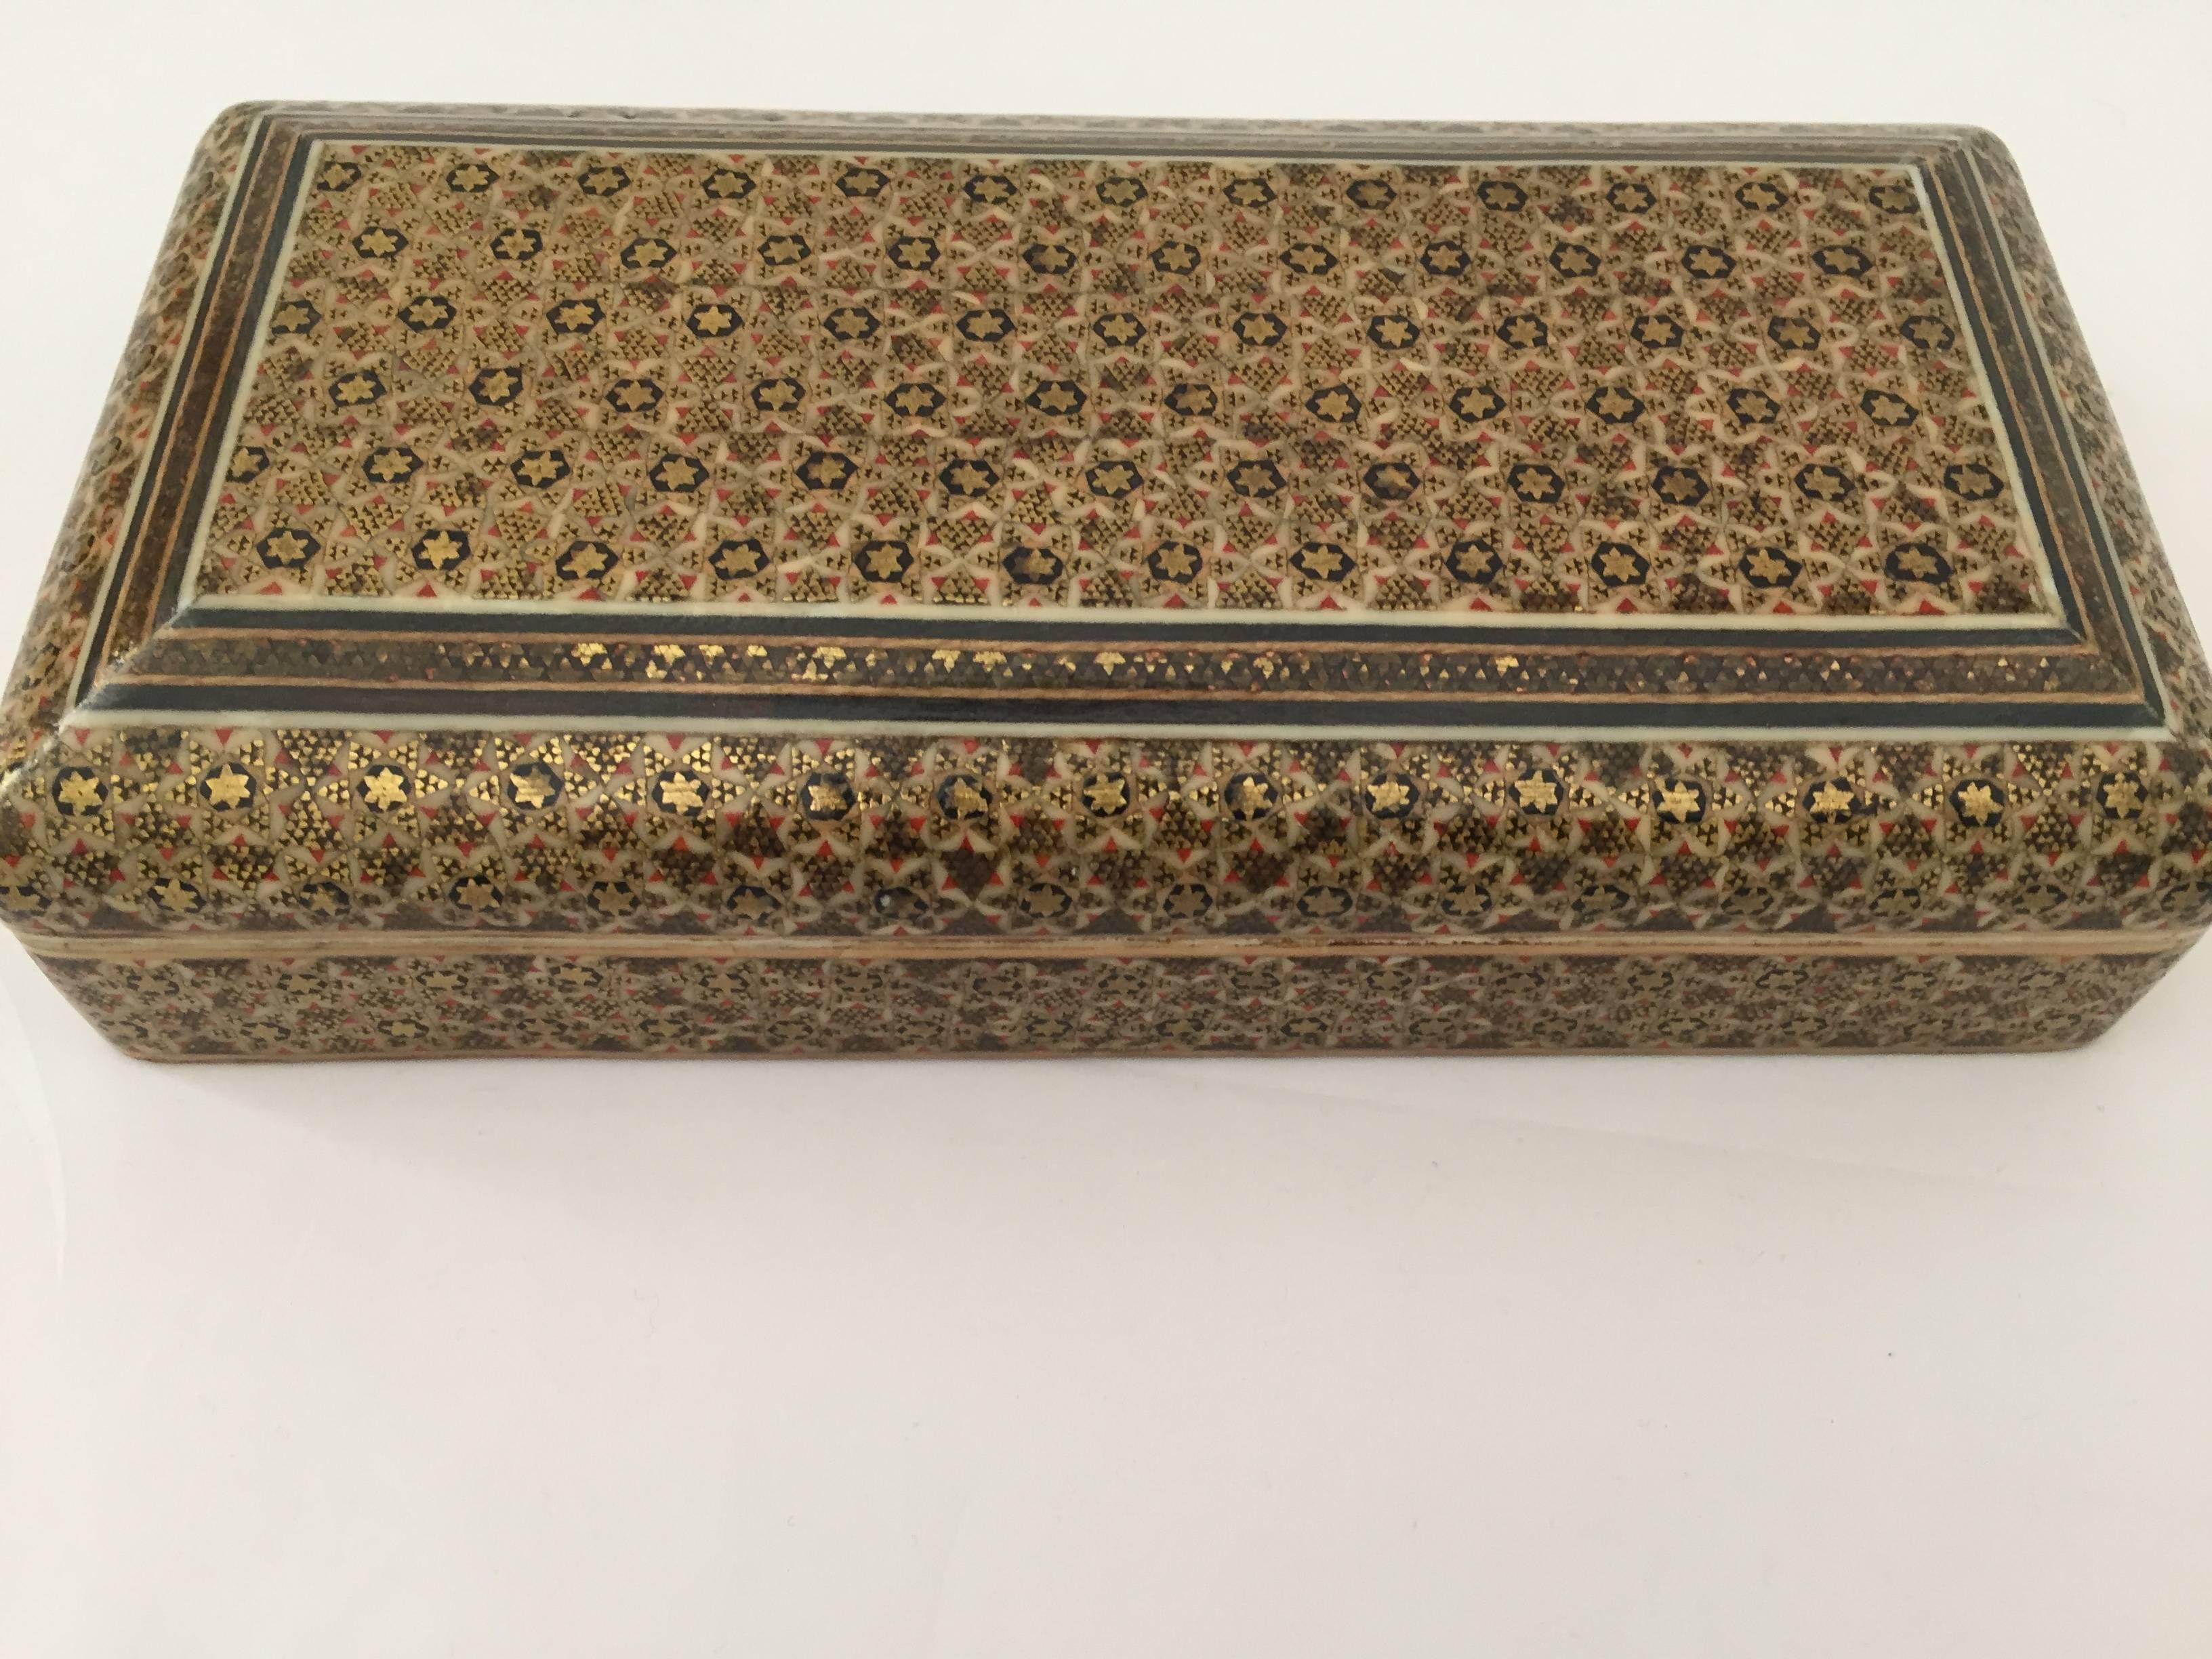 Wood Indo-Persian Khatam Micro Mosaic Jewelry Box For Sale